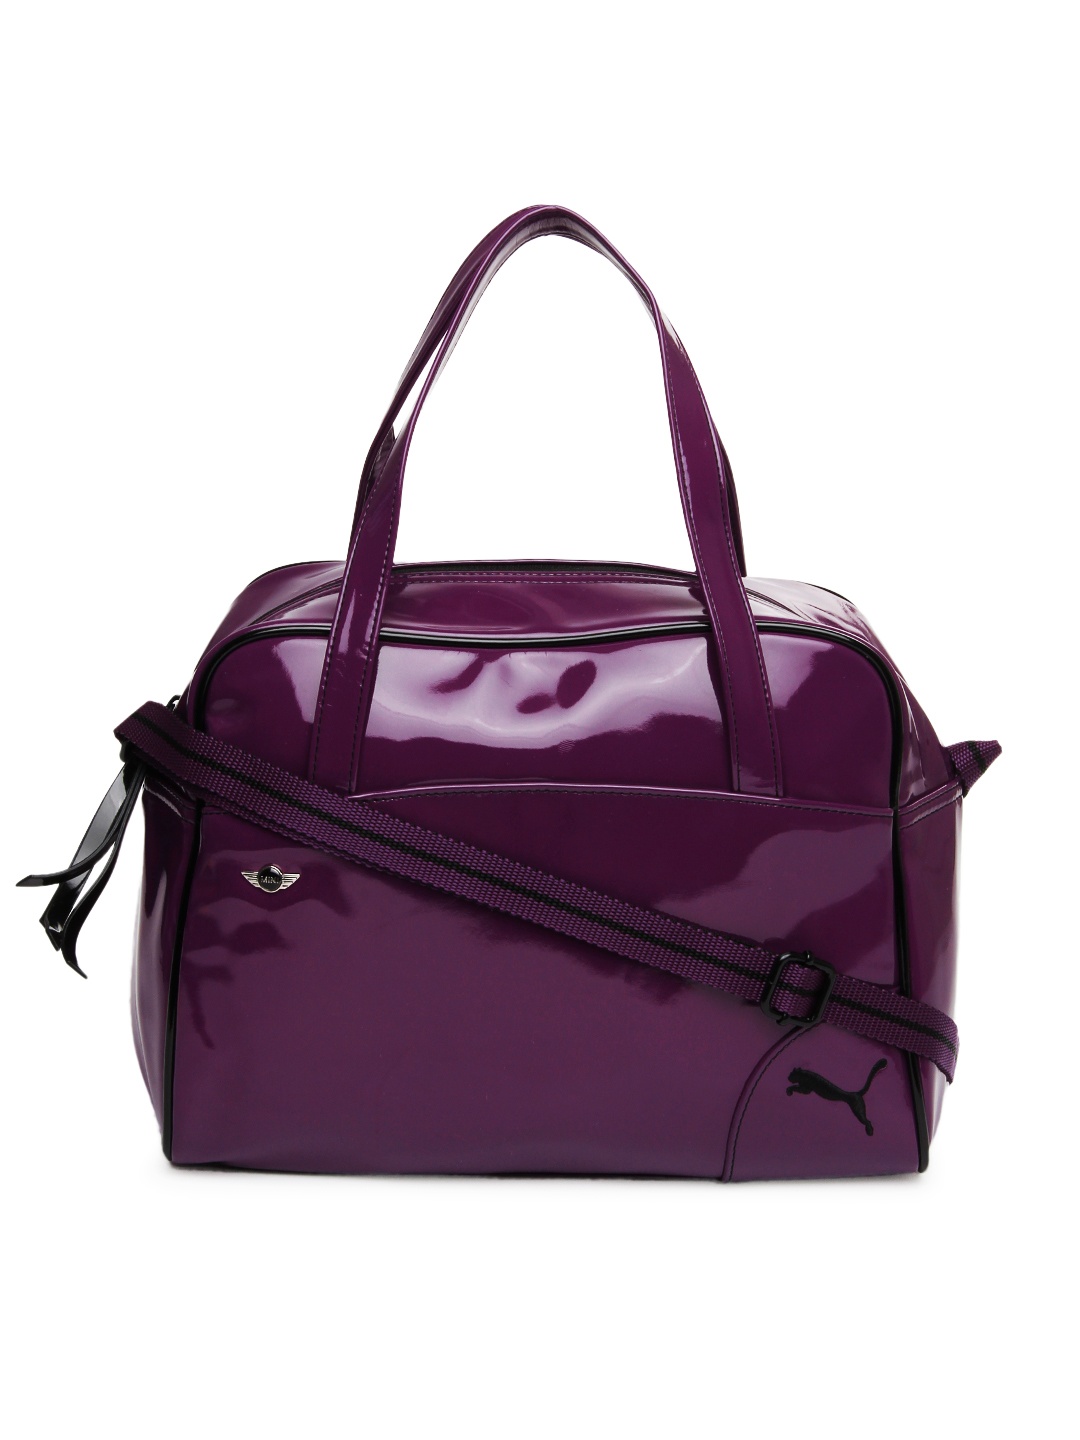 Myntra Puma Purple Mini Lifestyle Handbag 372290 | Buy Myntra Puma ...